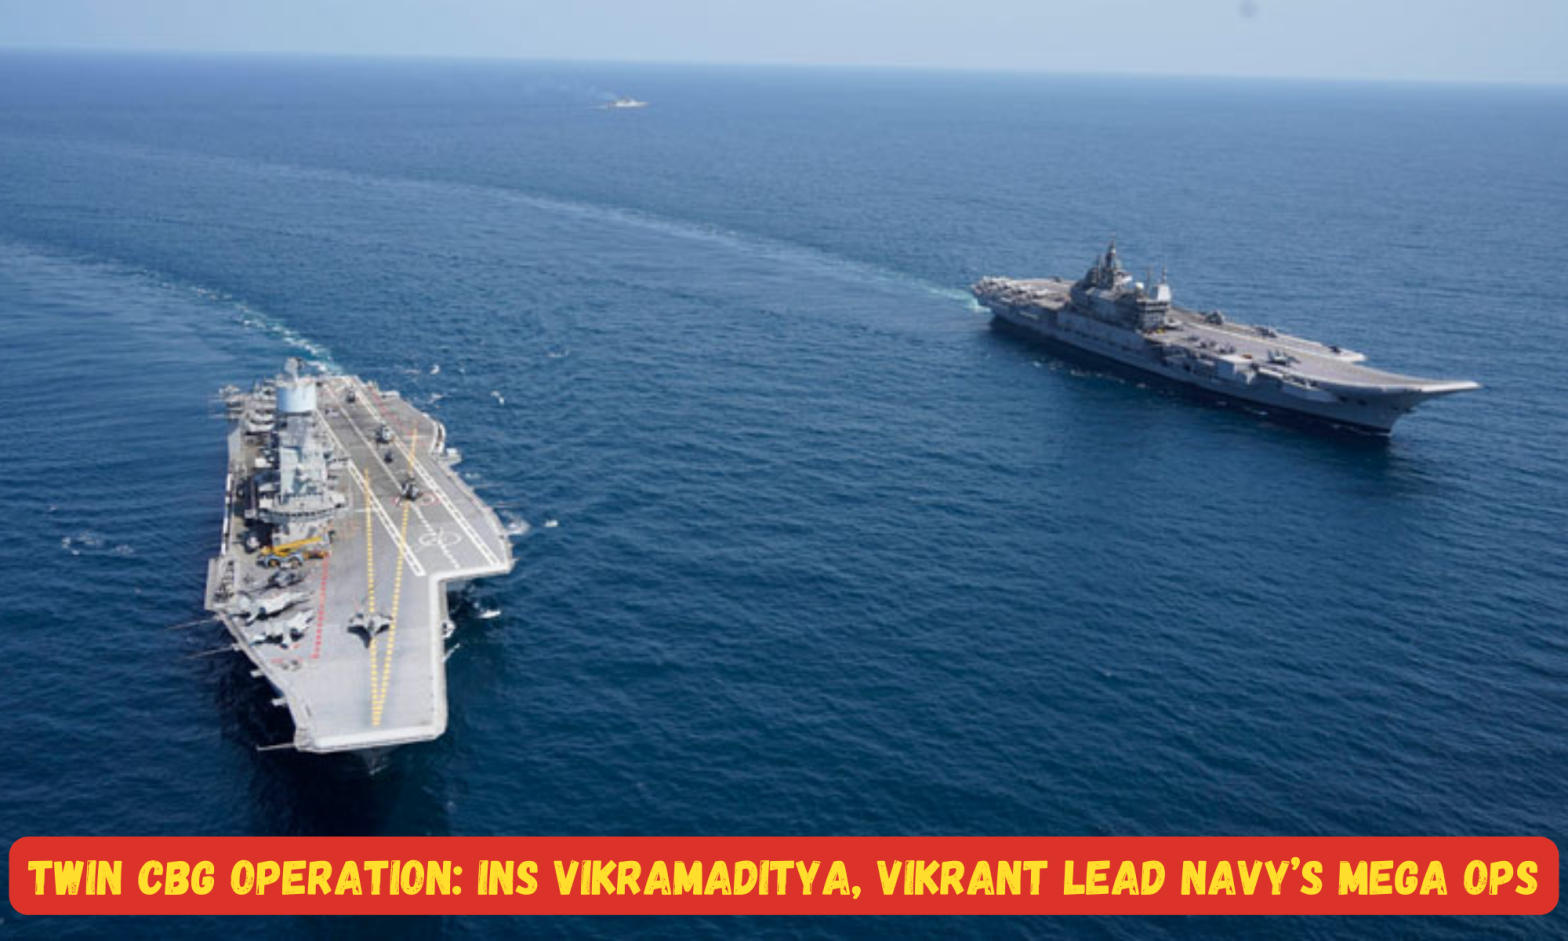 Twin CBG operation: INS Vikramaditya, Vikrant lead Navy’s mega ops